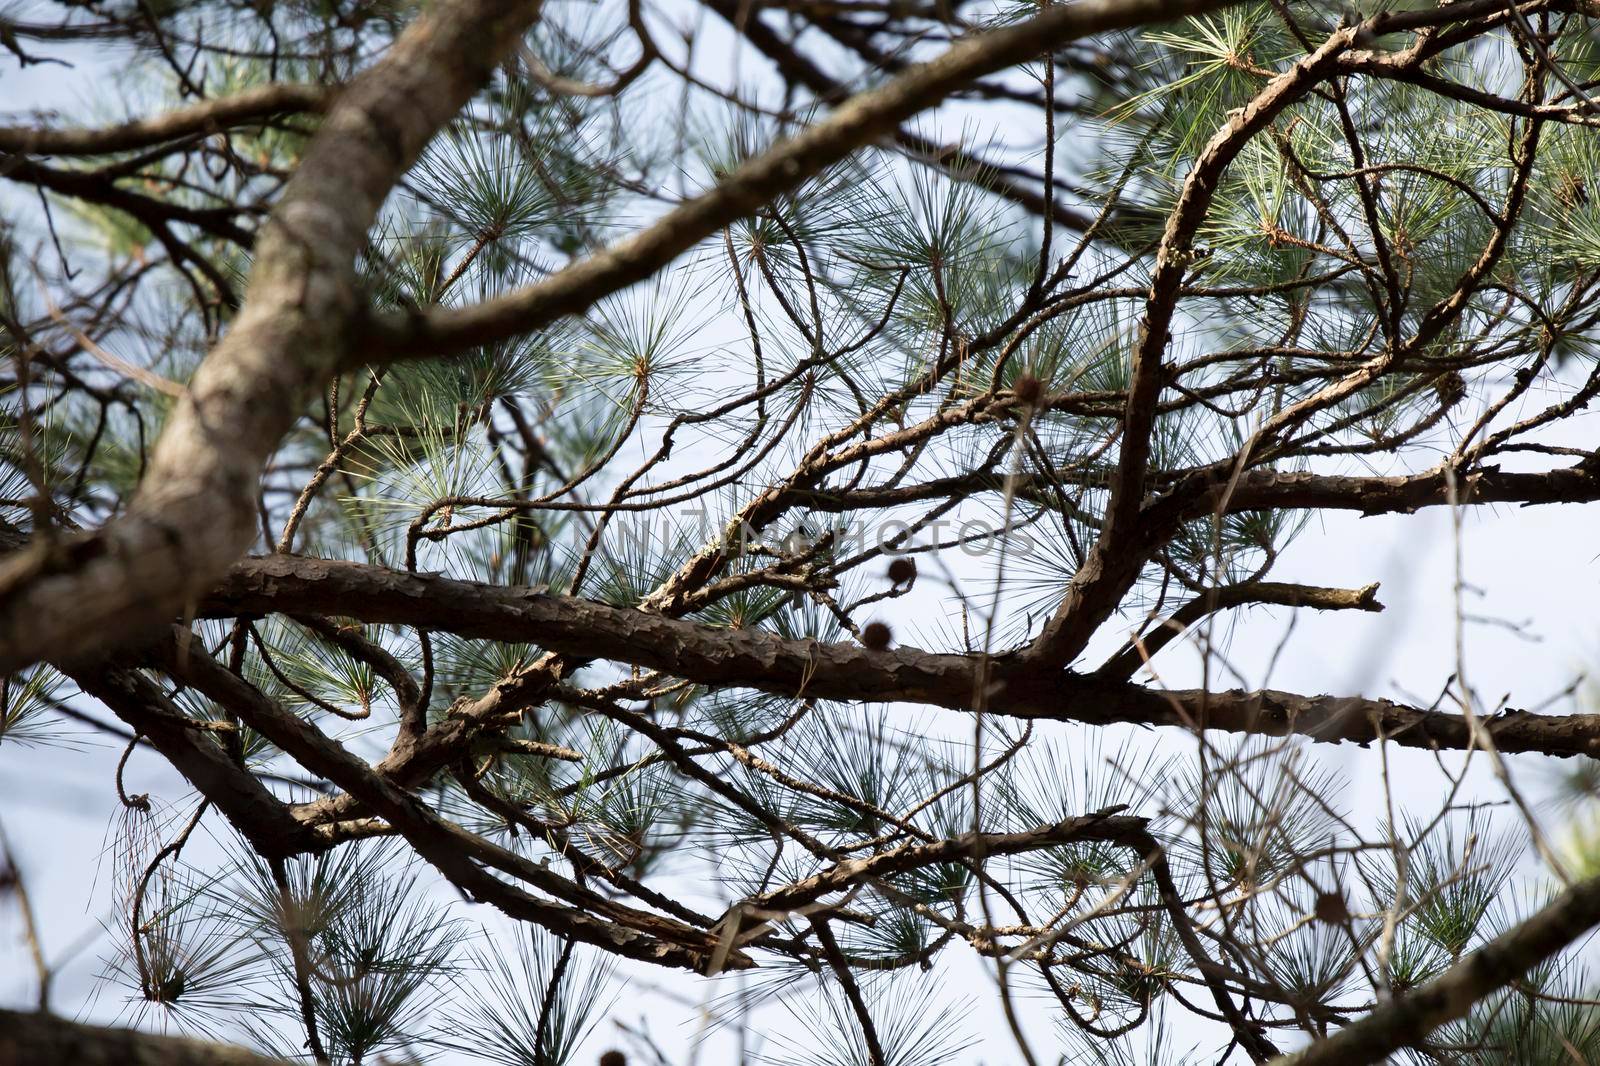 Tiny Carolina chickadee (Poecile carolinensis) in a pine tree